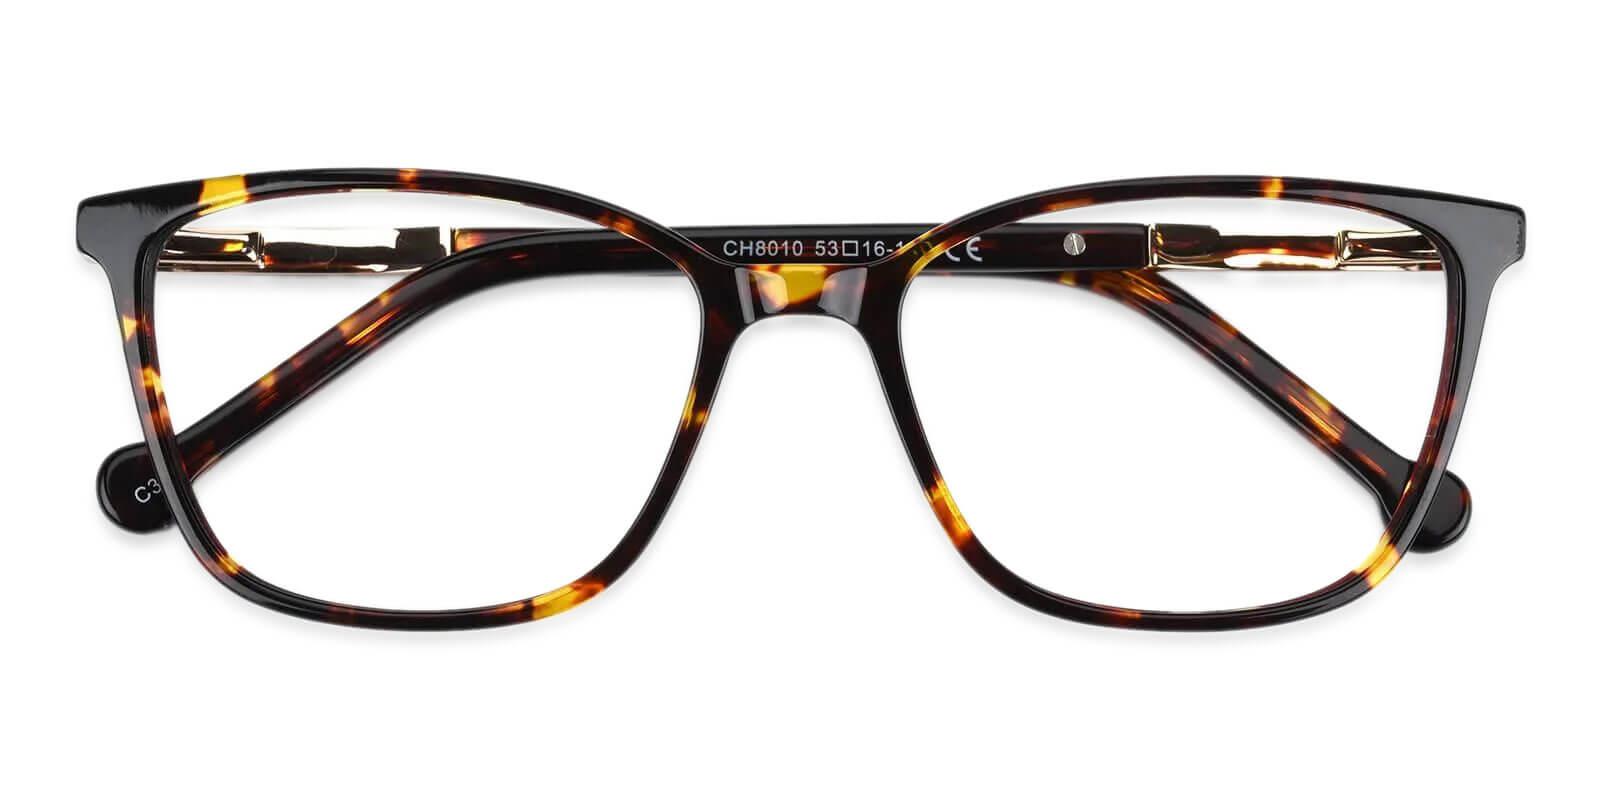 Traverse Tortoise Acetate Eyeglasses , SpringHinges , UniversalBridgeFit Frames from ABBE Glasses